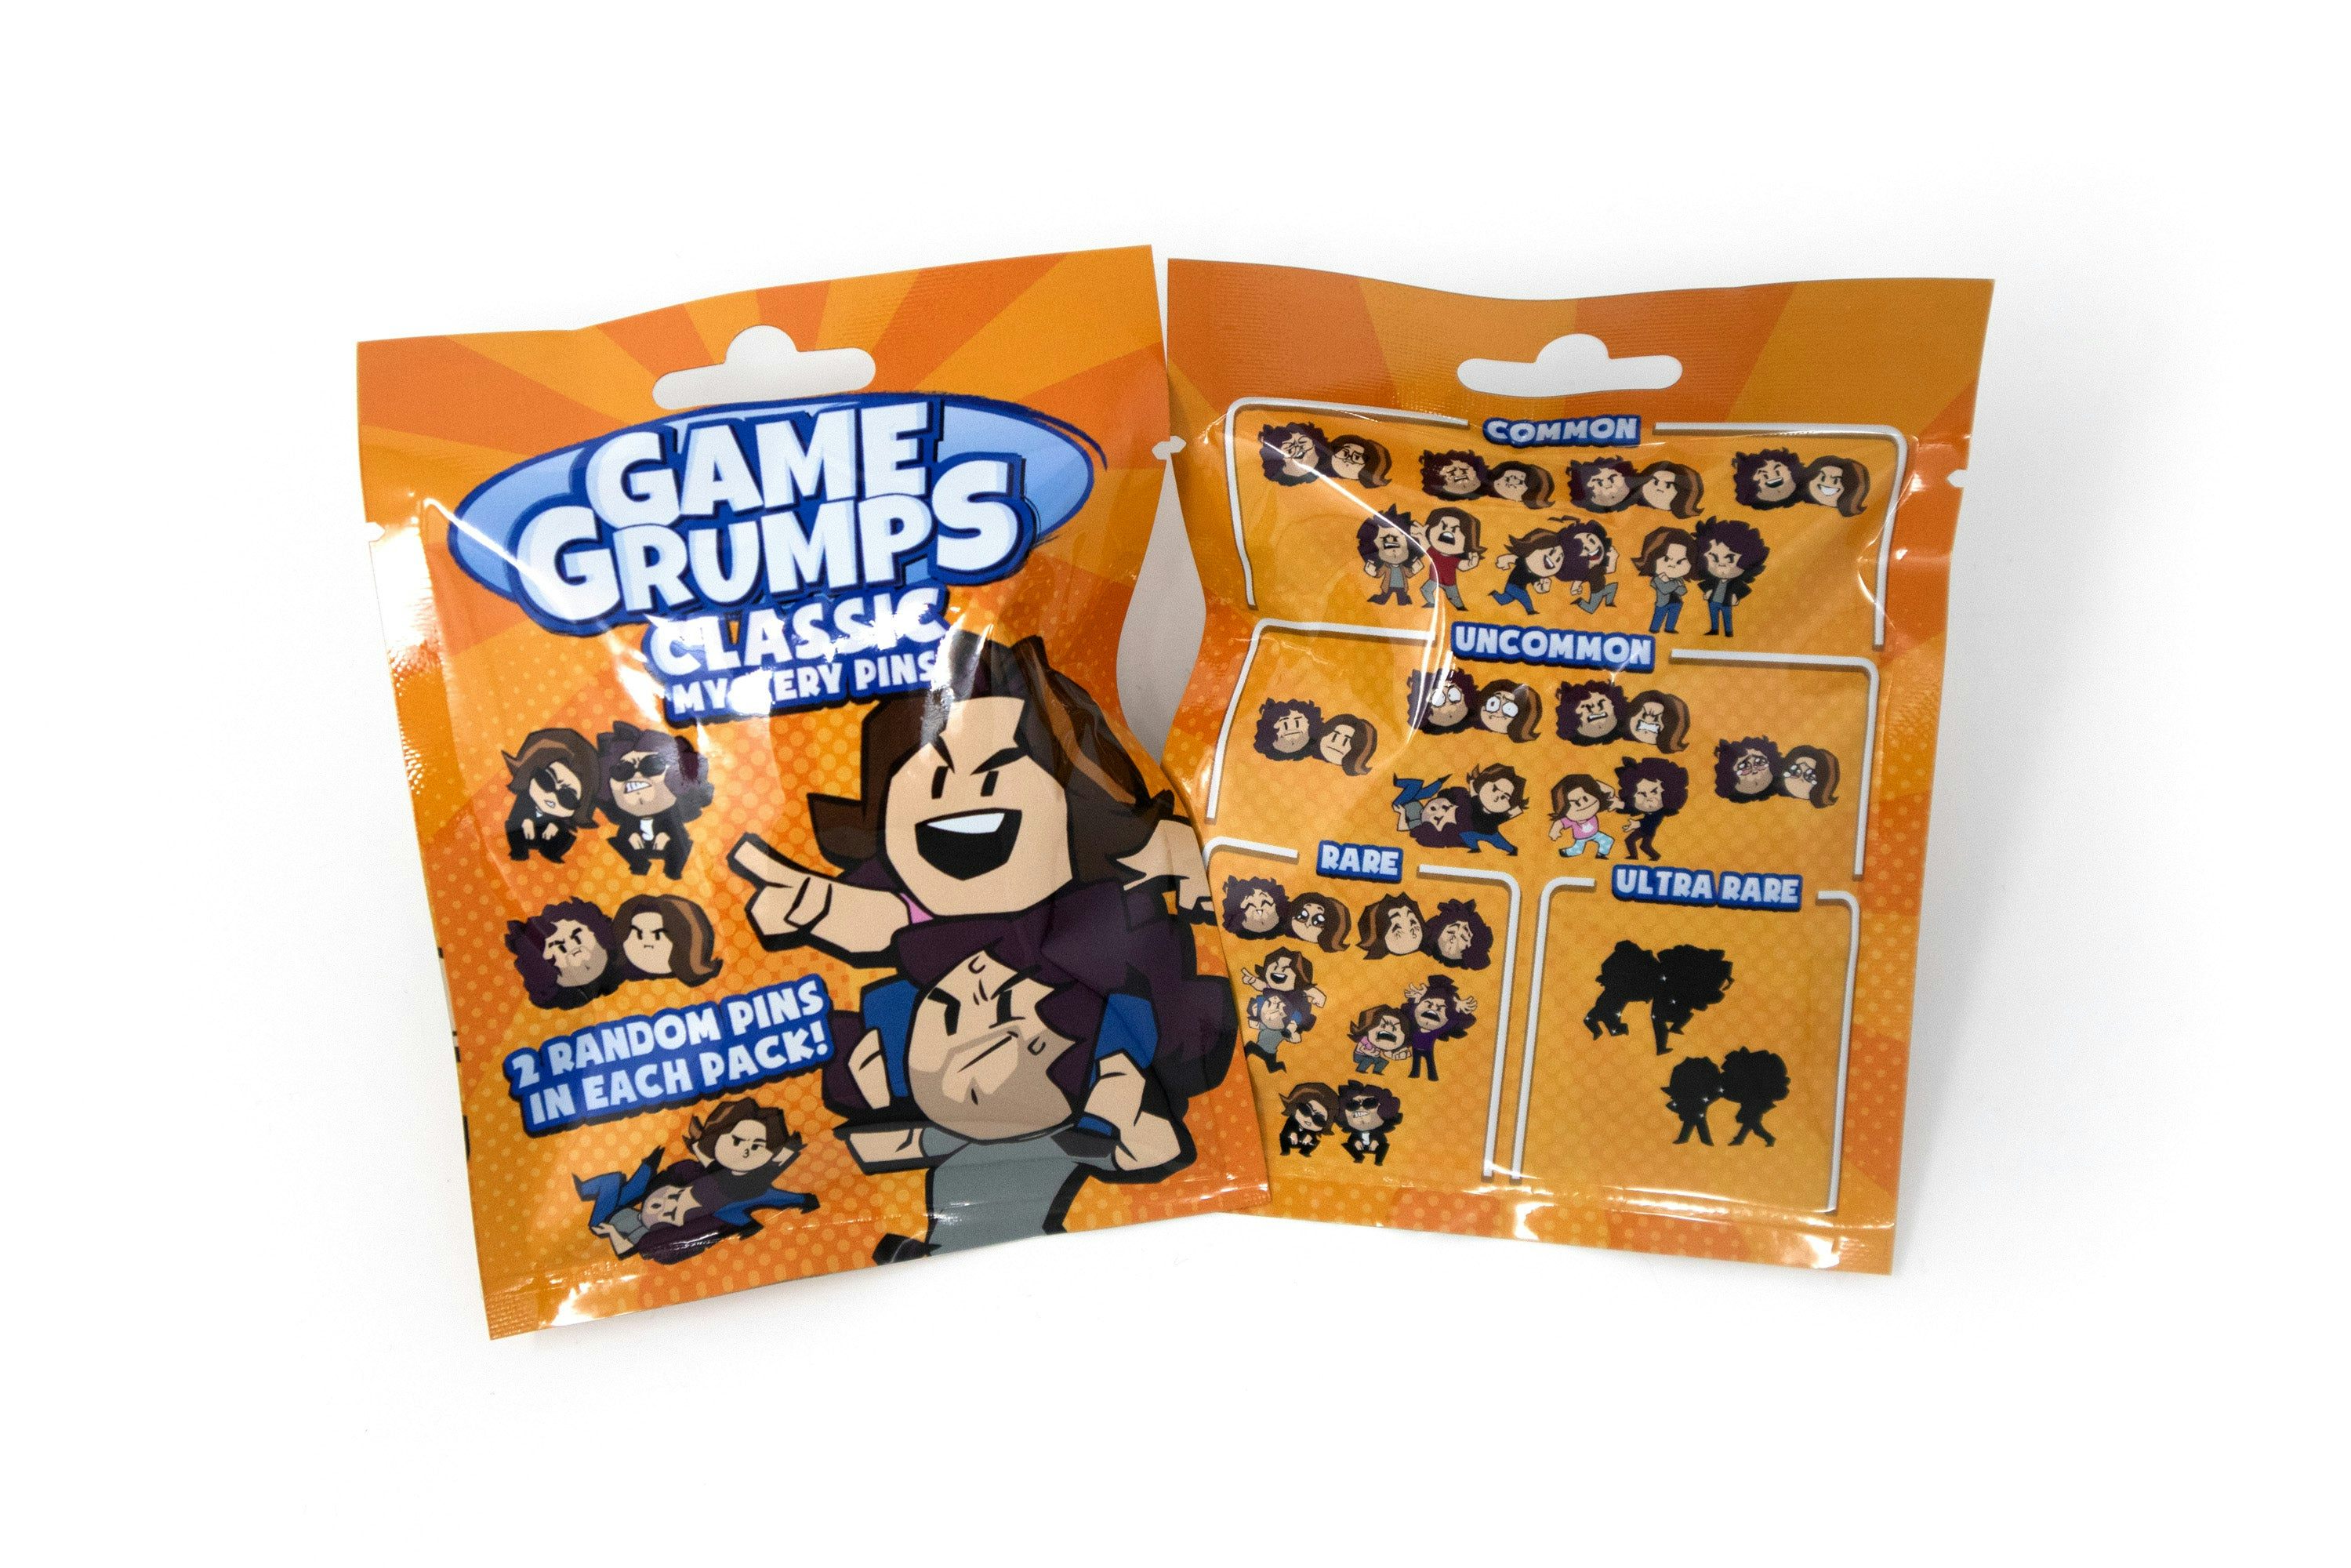 Game Grumps Classic Mystery Pins - 2 RANDOM PINS